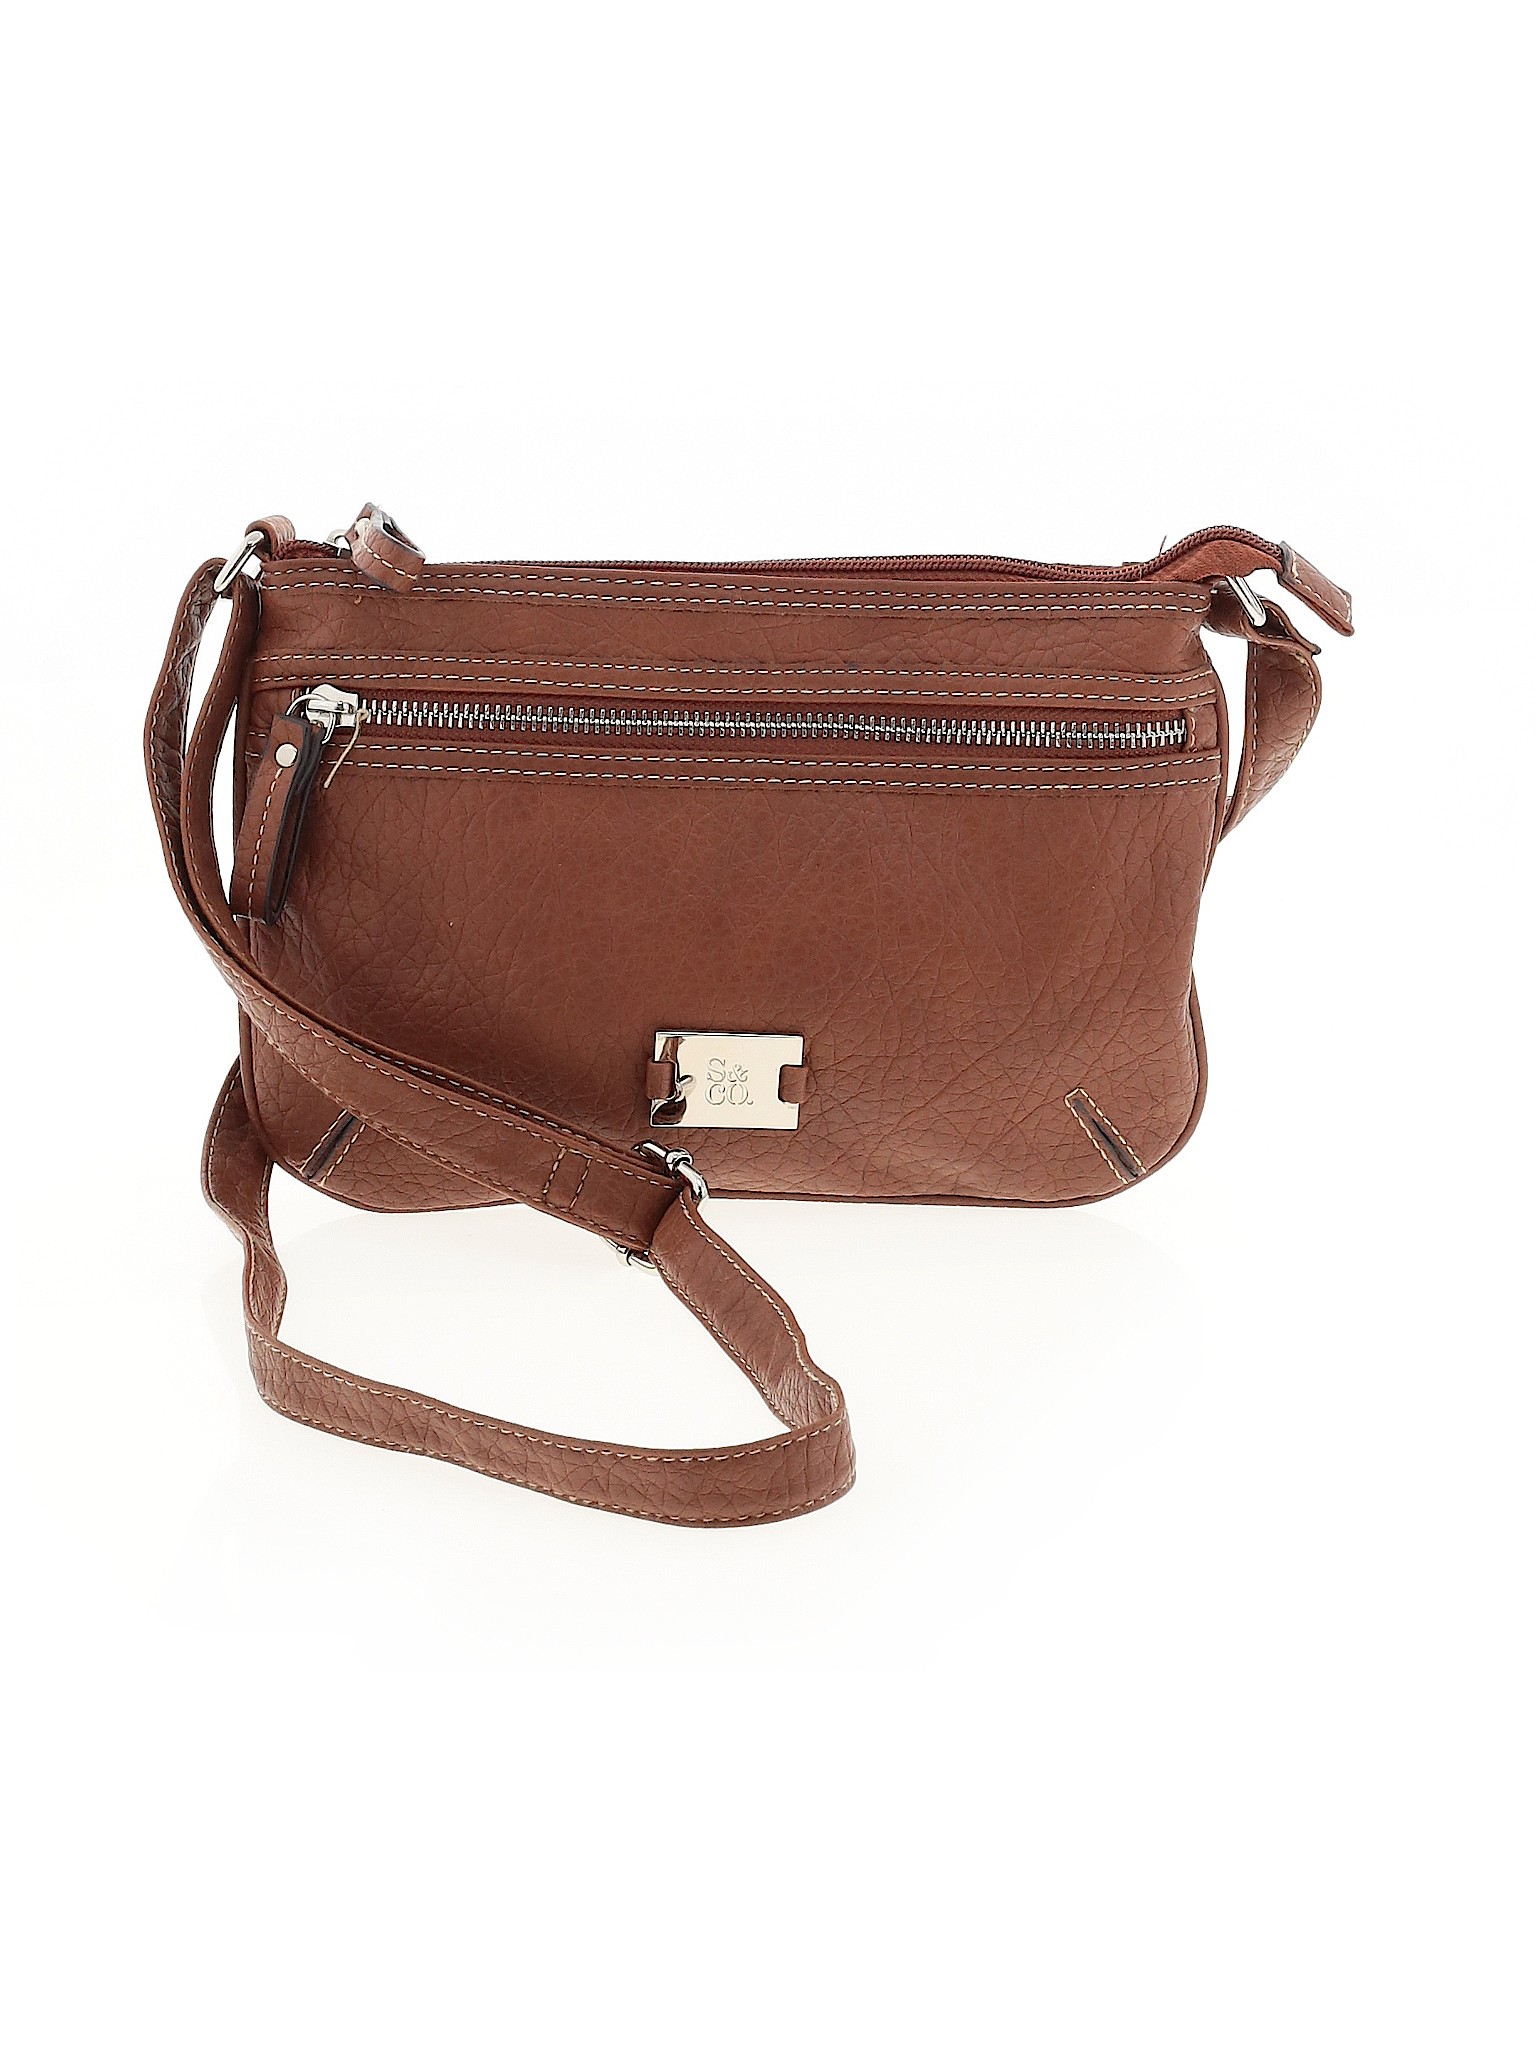 S&Co. Women Brown Crossbody Bag One Size | eBay